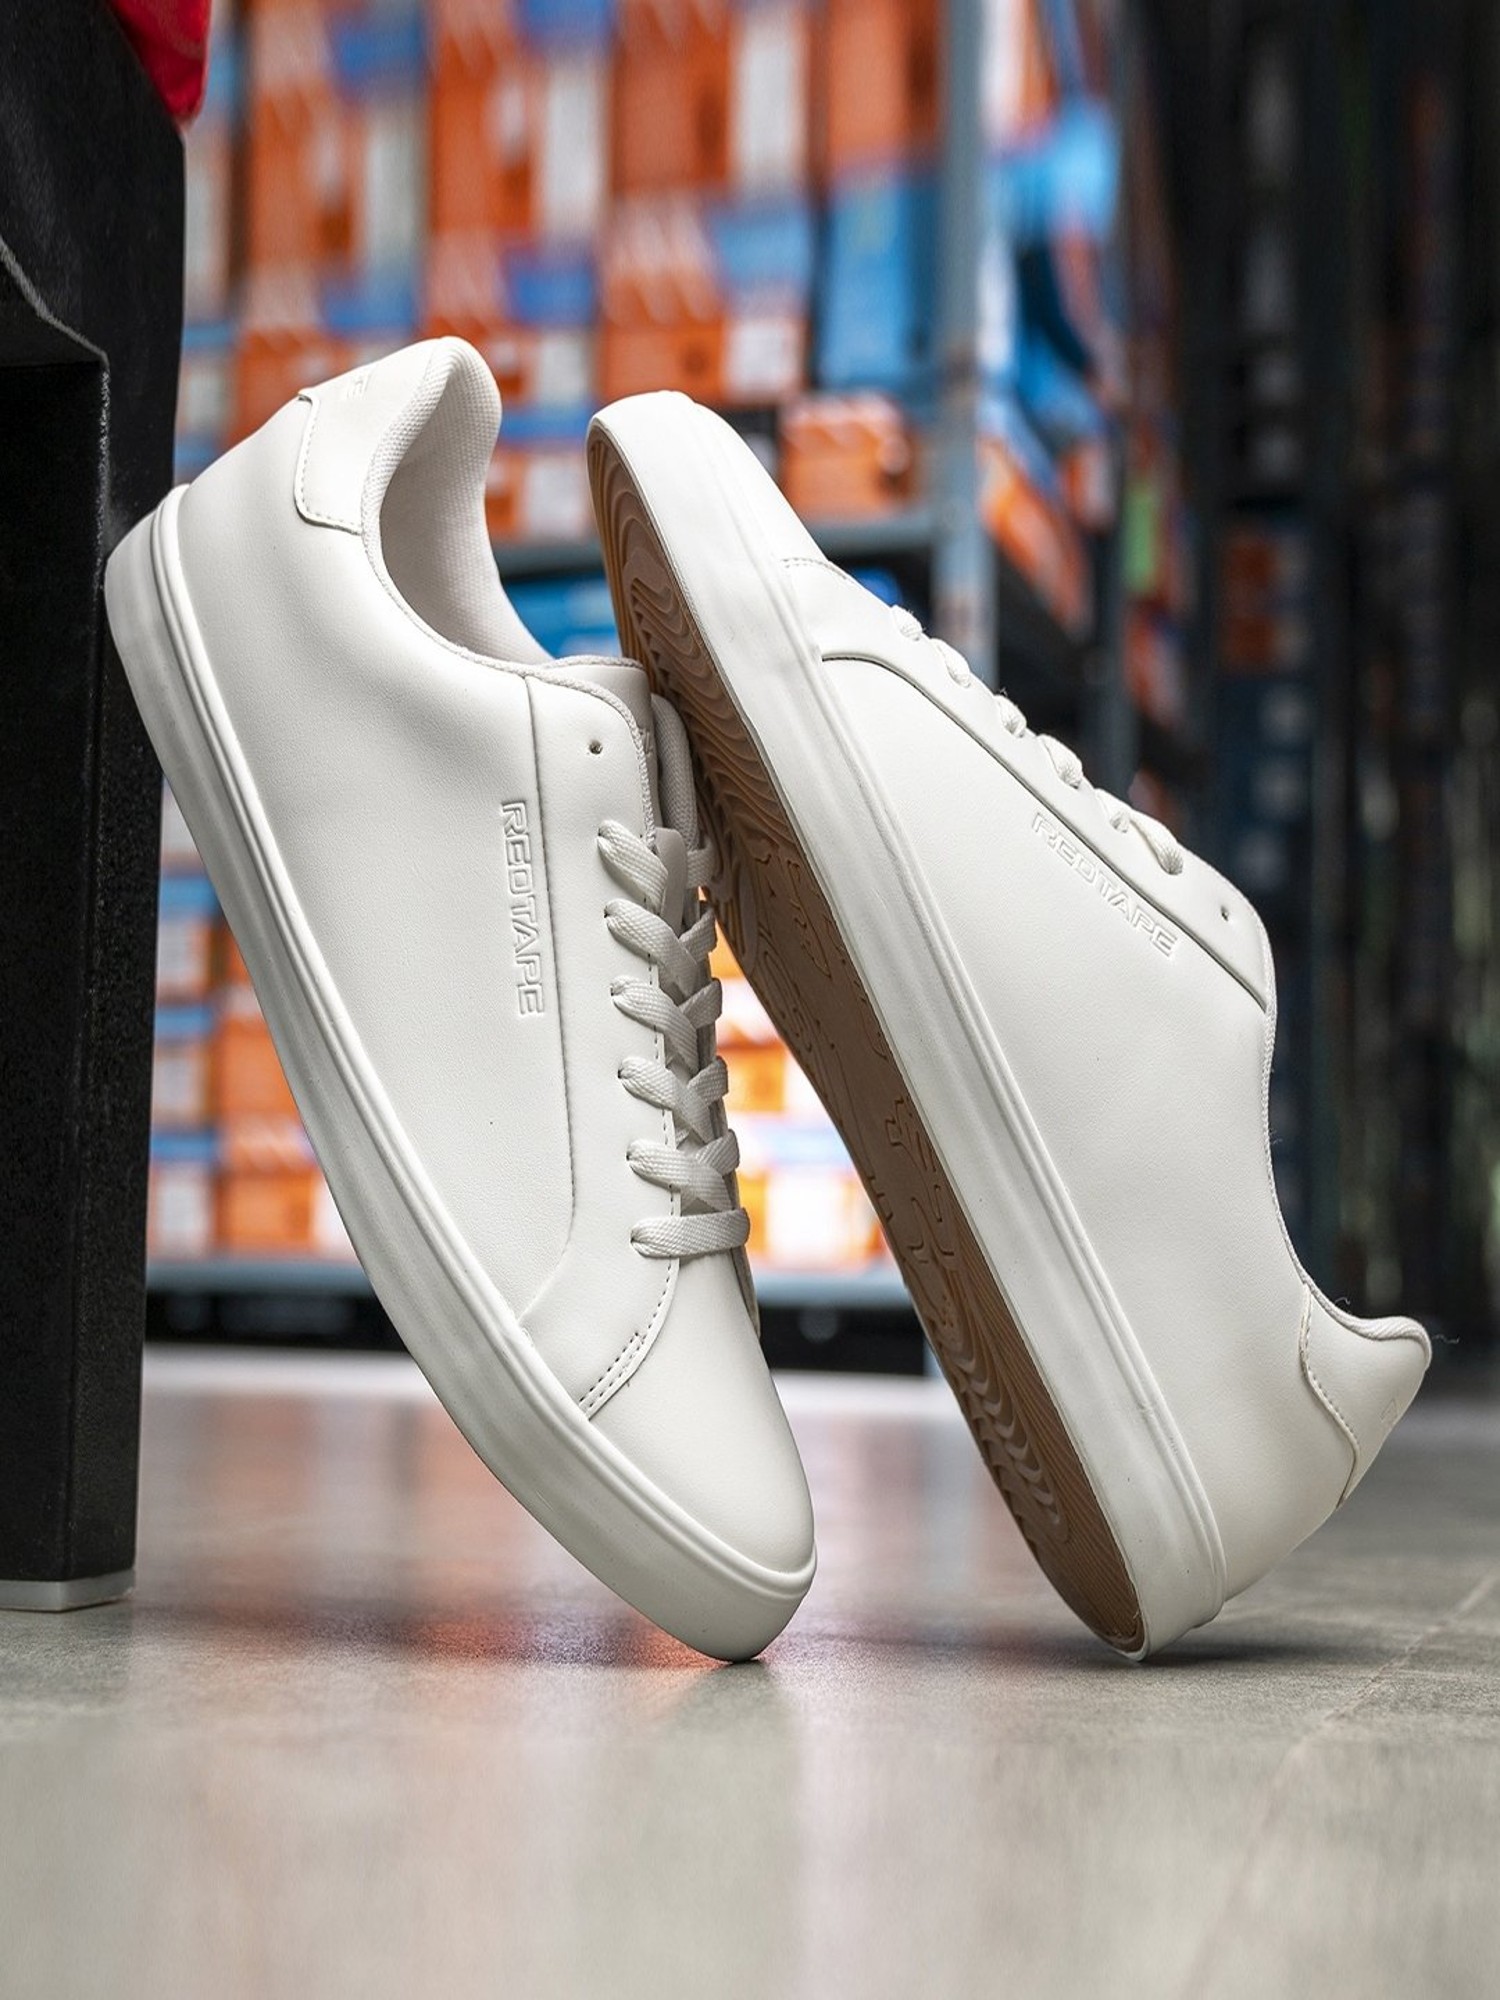 Vendoz Women and Girls Latest Collection Stylish White Casual Shoes Sneakers   3UK 36 EU  Amazonin Fashion